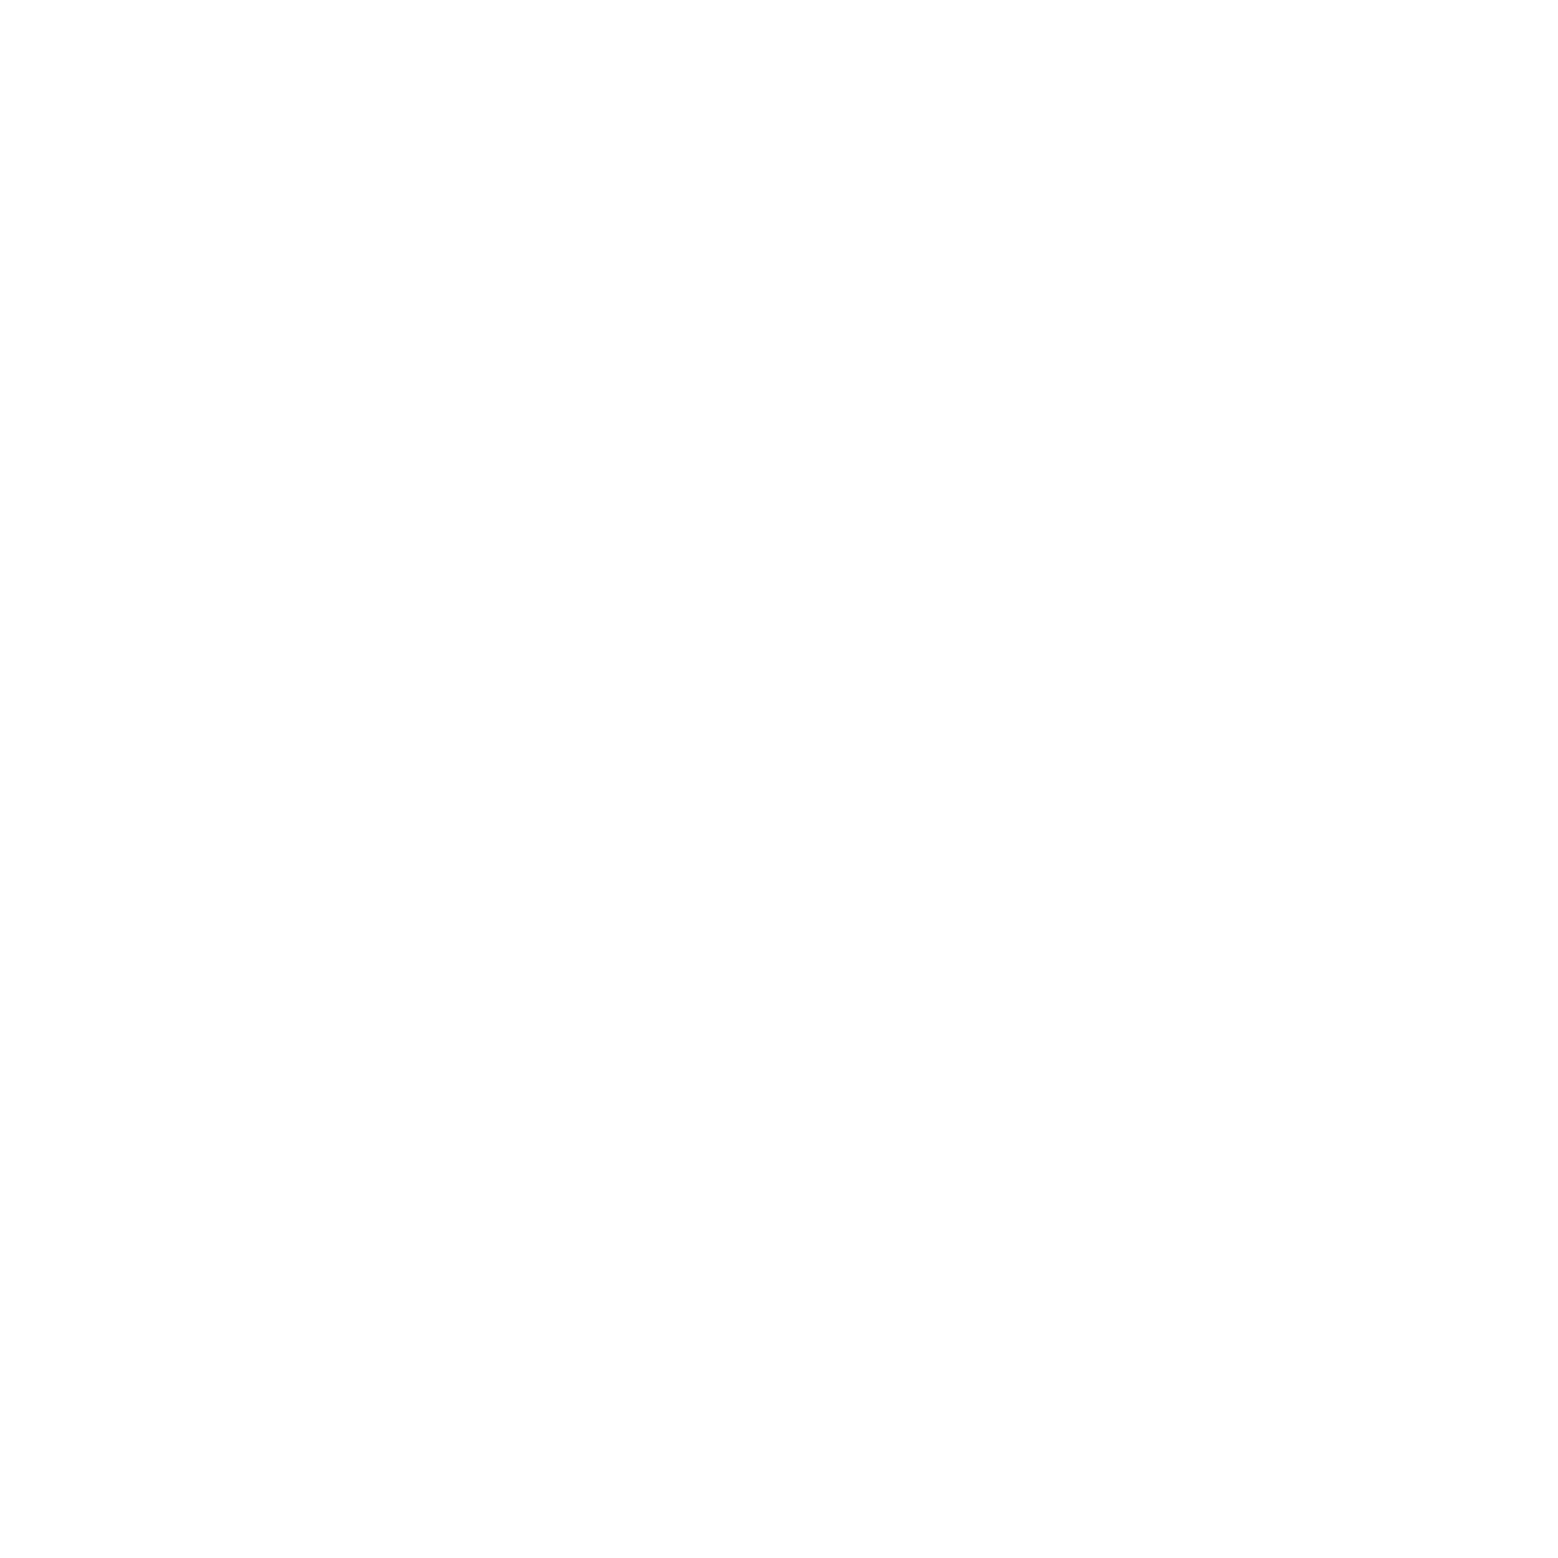 Kingnet Network logo pour fonds sombres (PNG transparent)